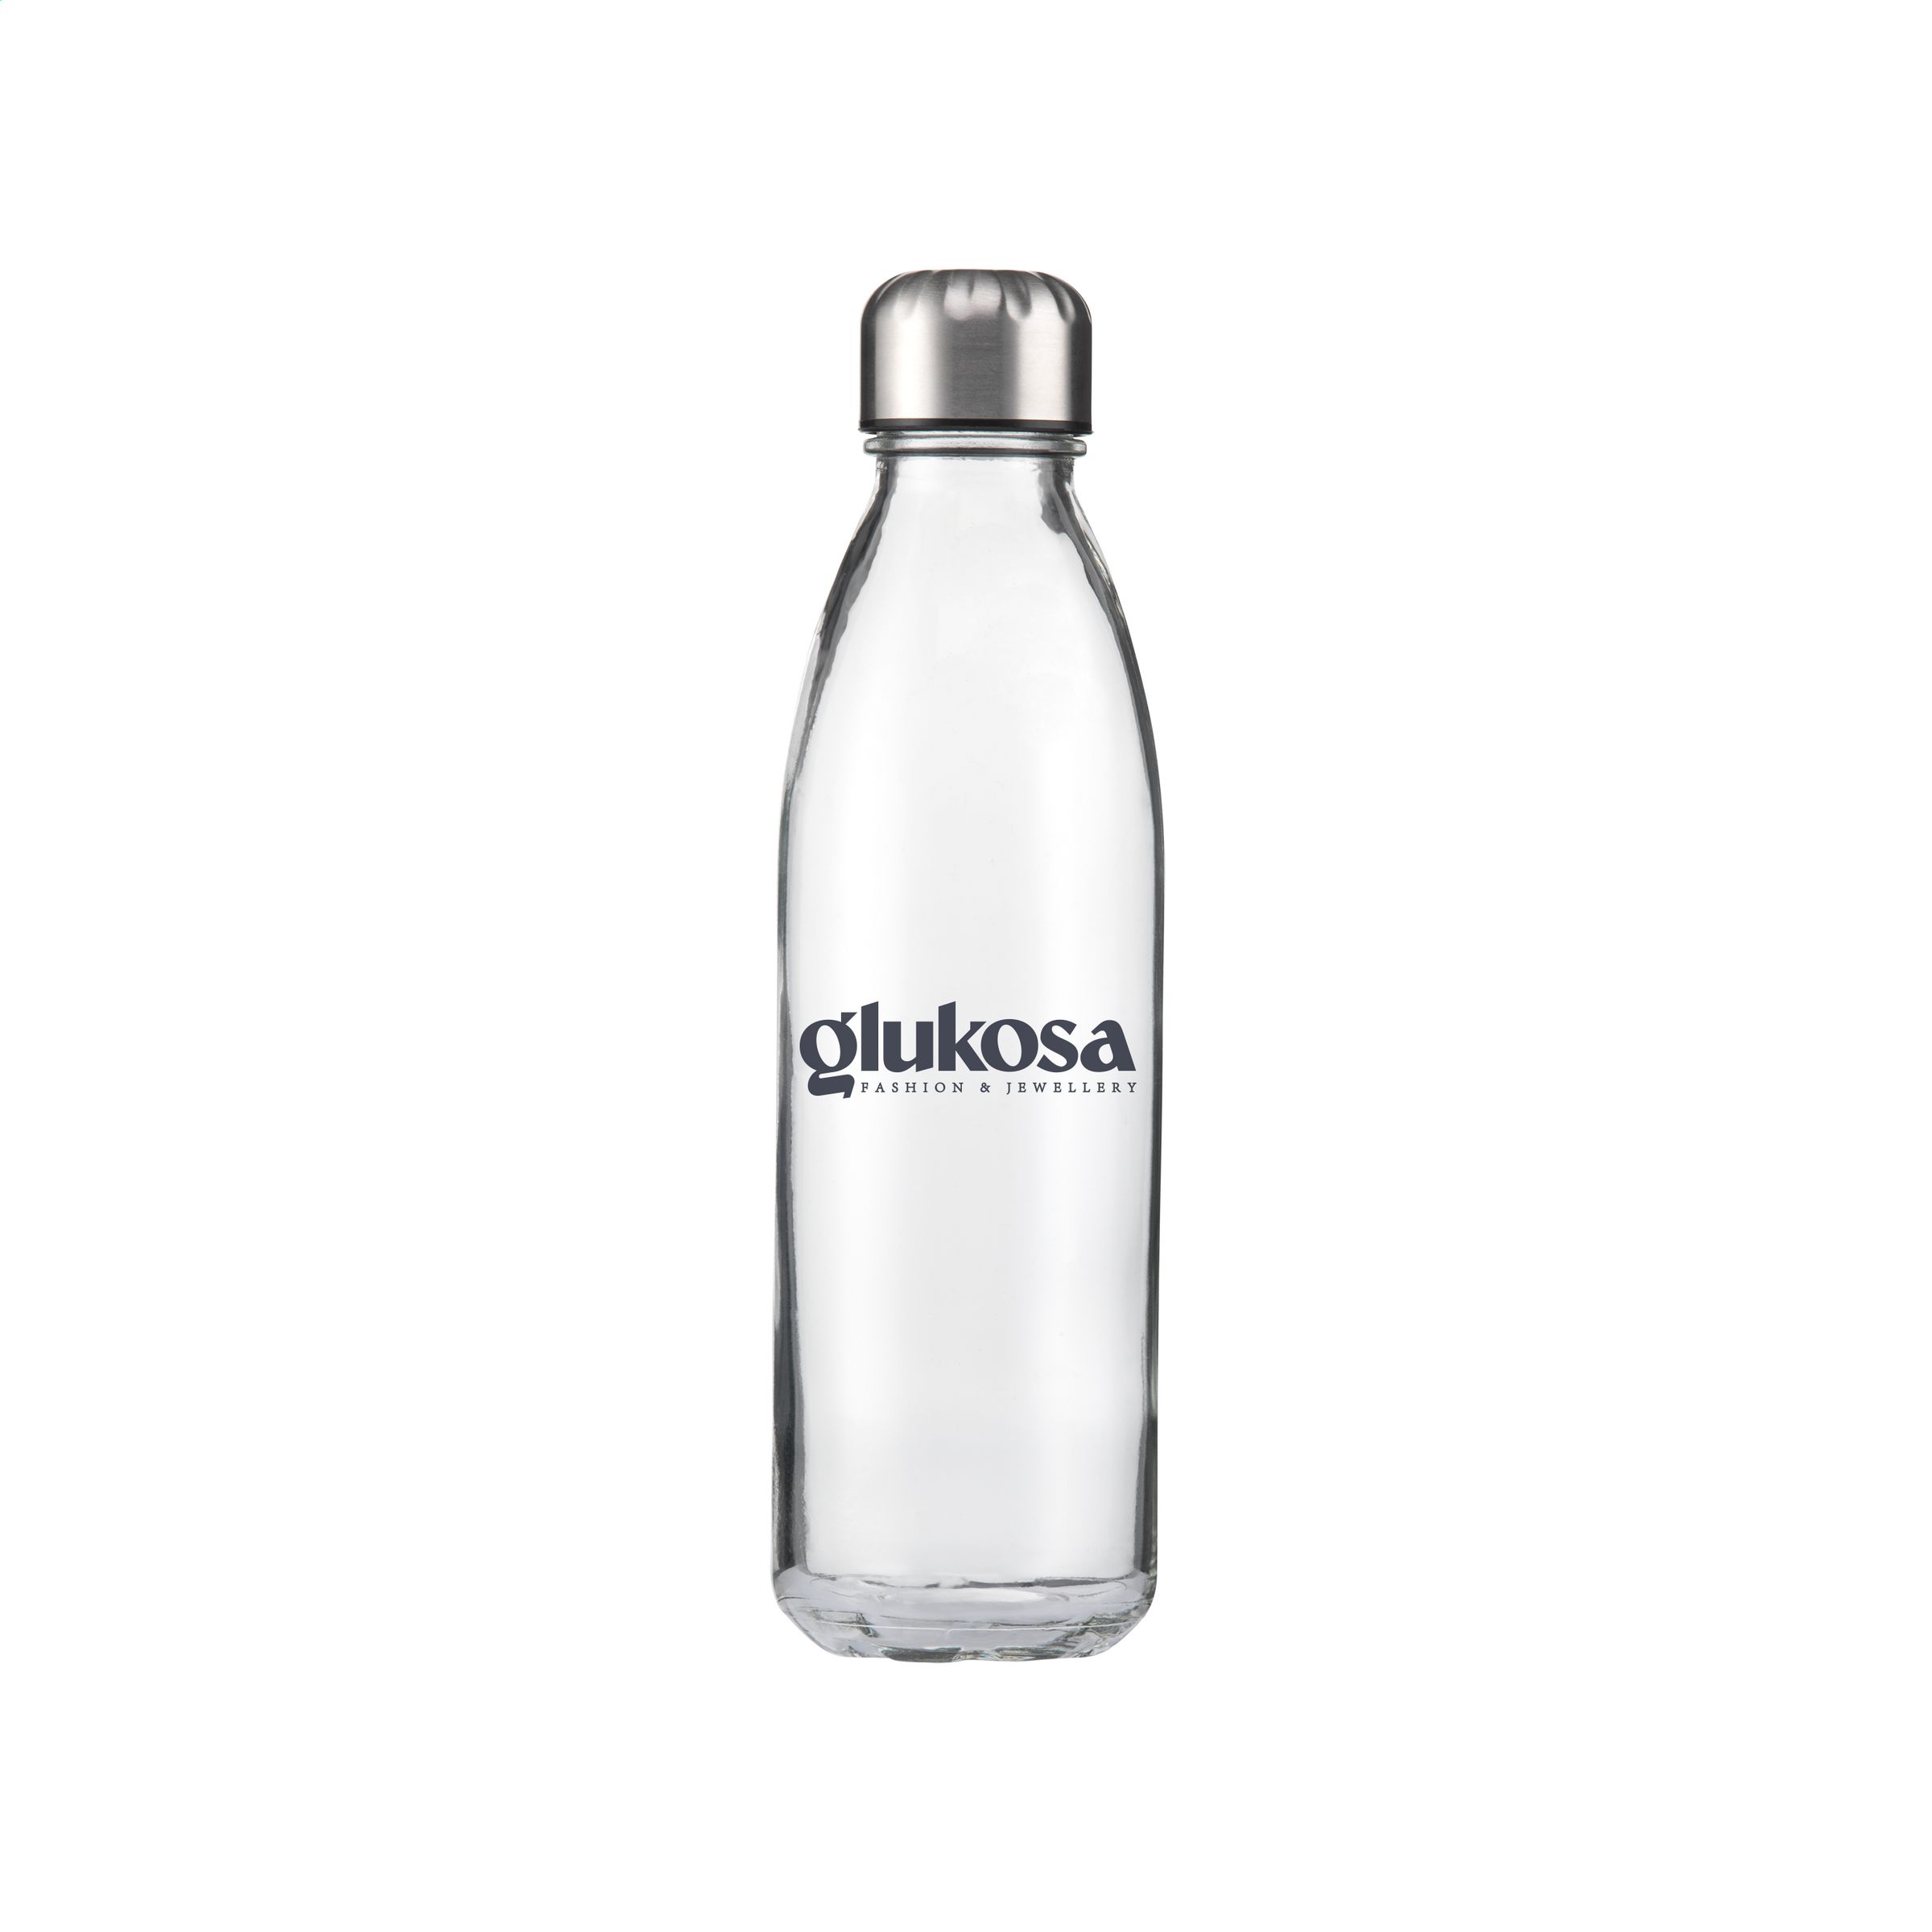 Botella de agua de vidrio de soda-cal de lujo con tapa de acero inoxidable - Pedmore